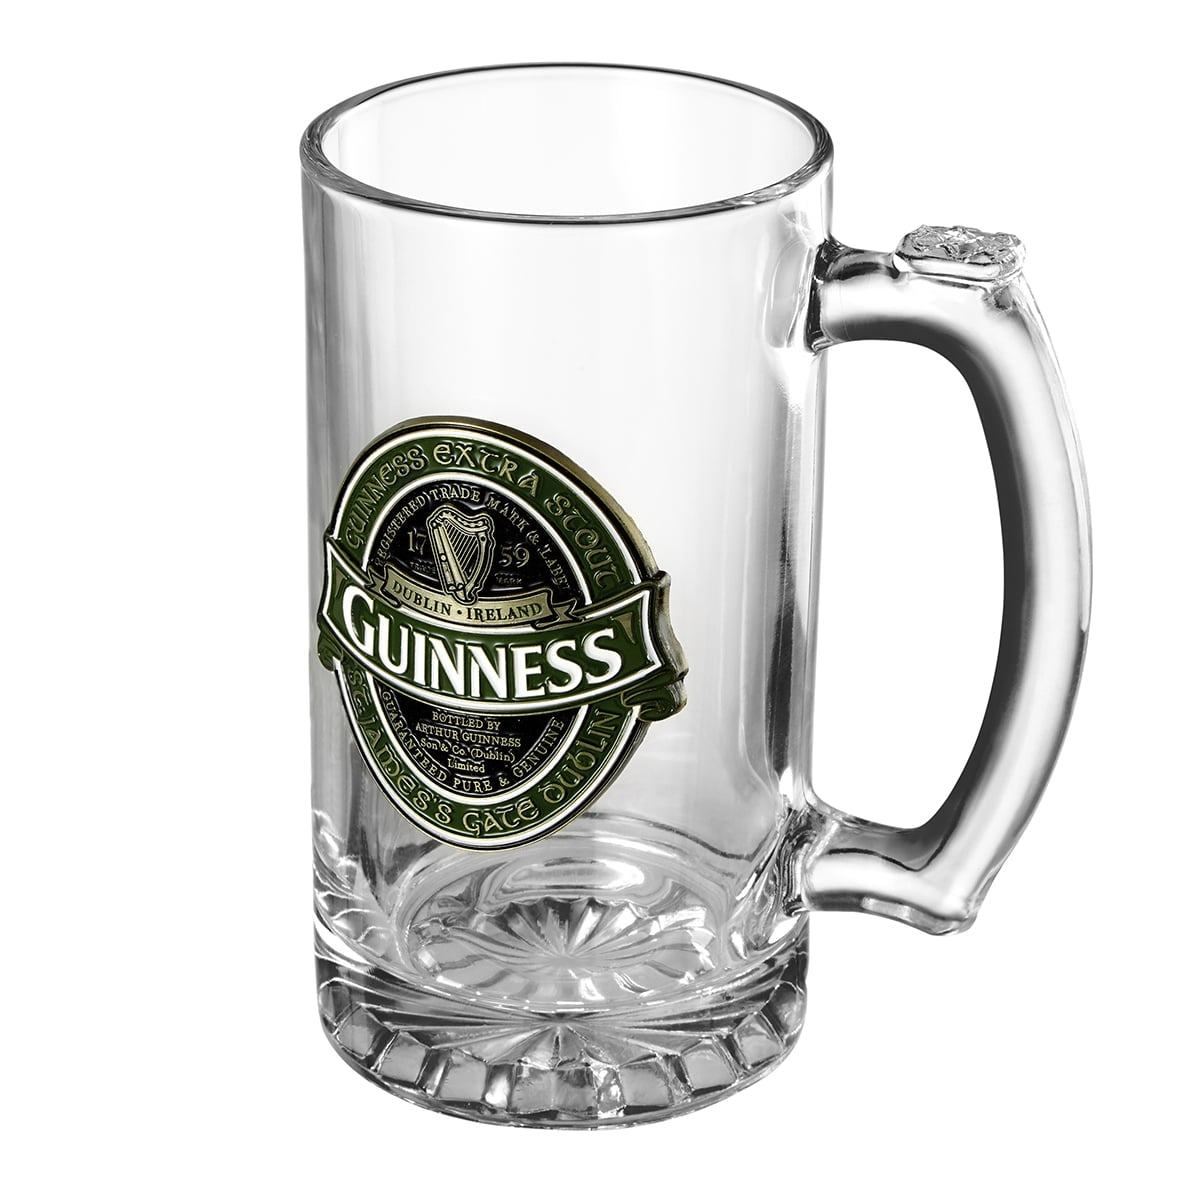 Guinness Ireland - Tankard With Badge